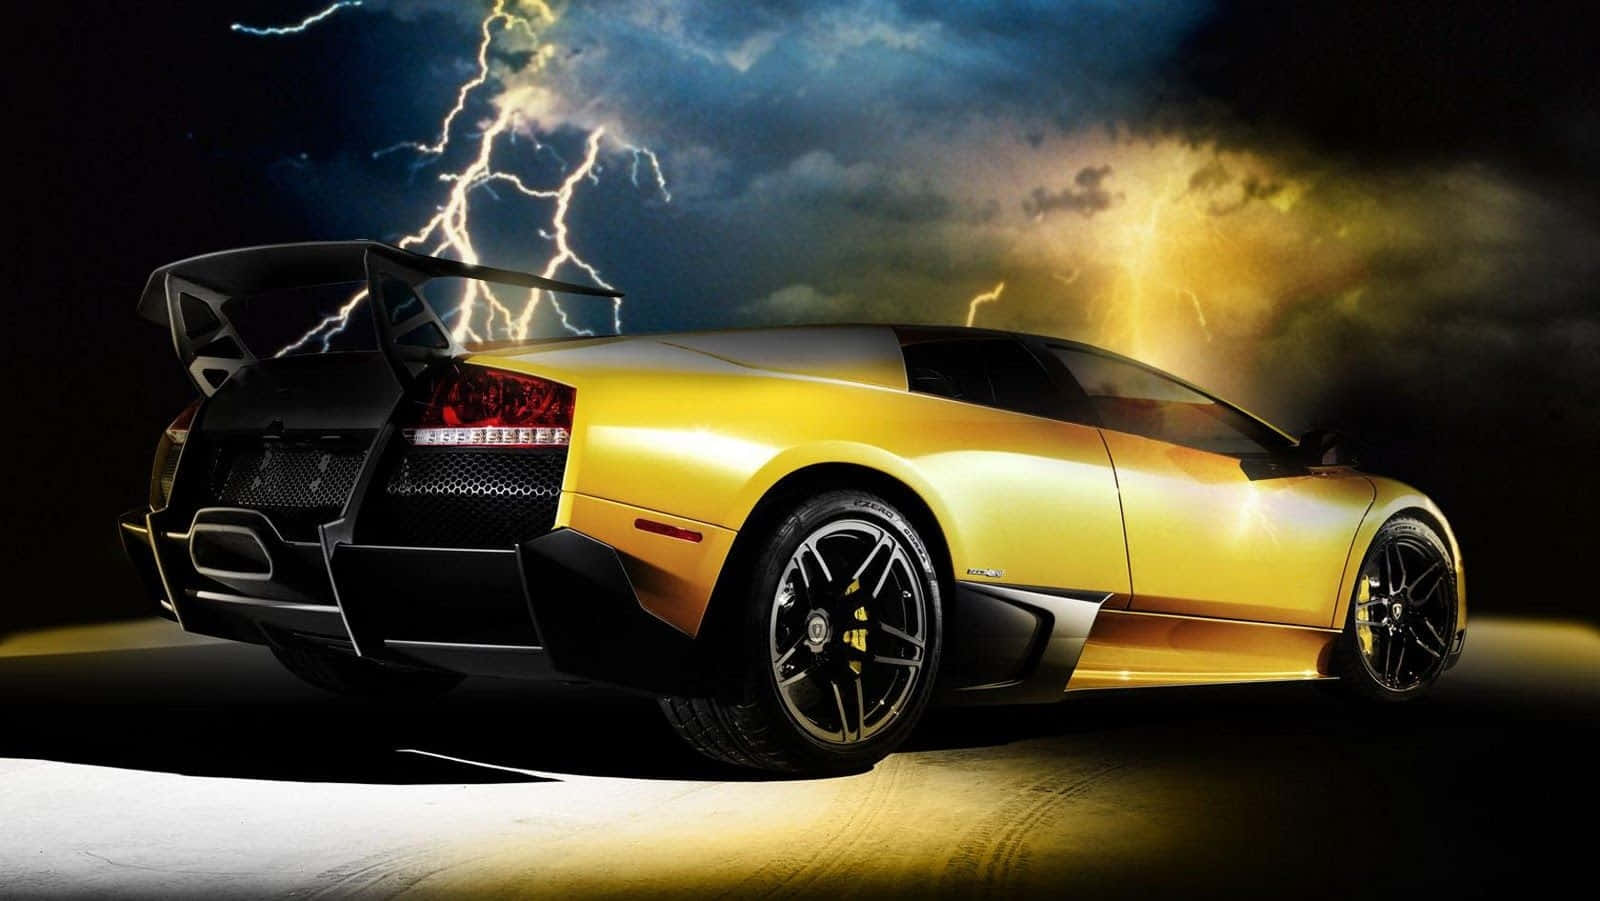 "Cool Lamborghini Looking Ready to Race" Wallpaper